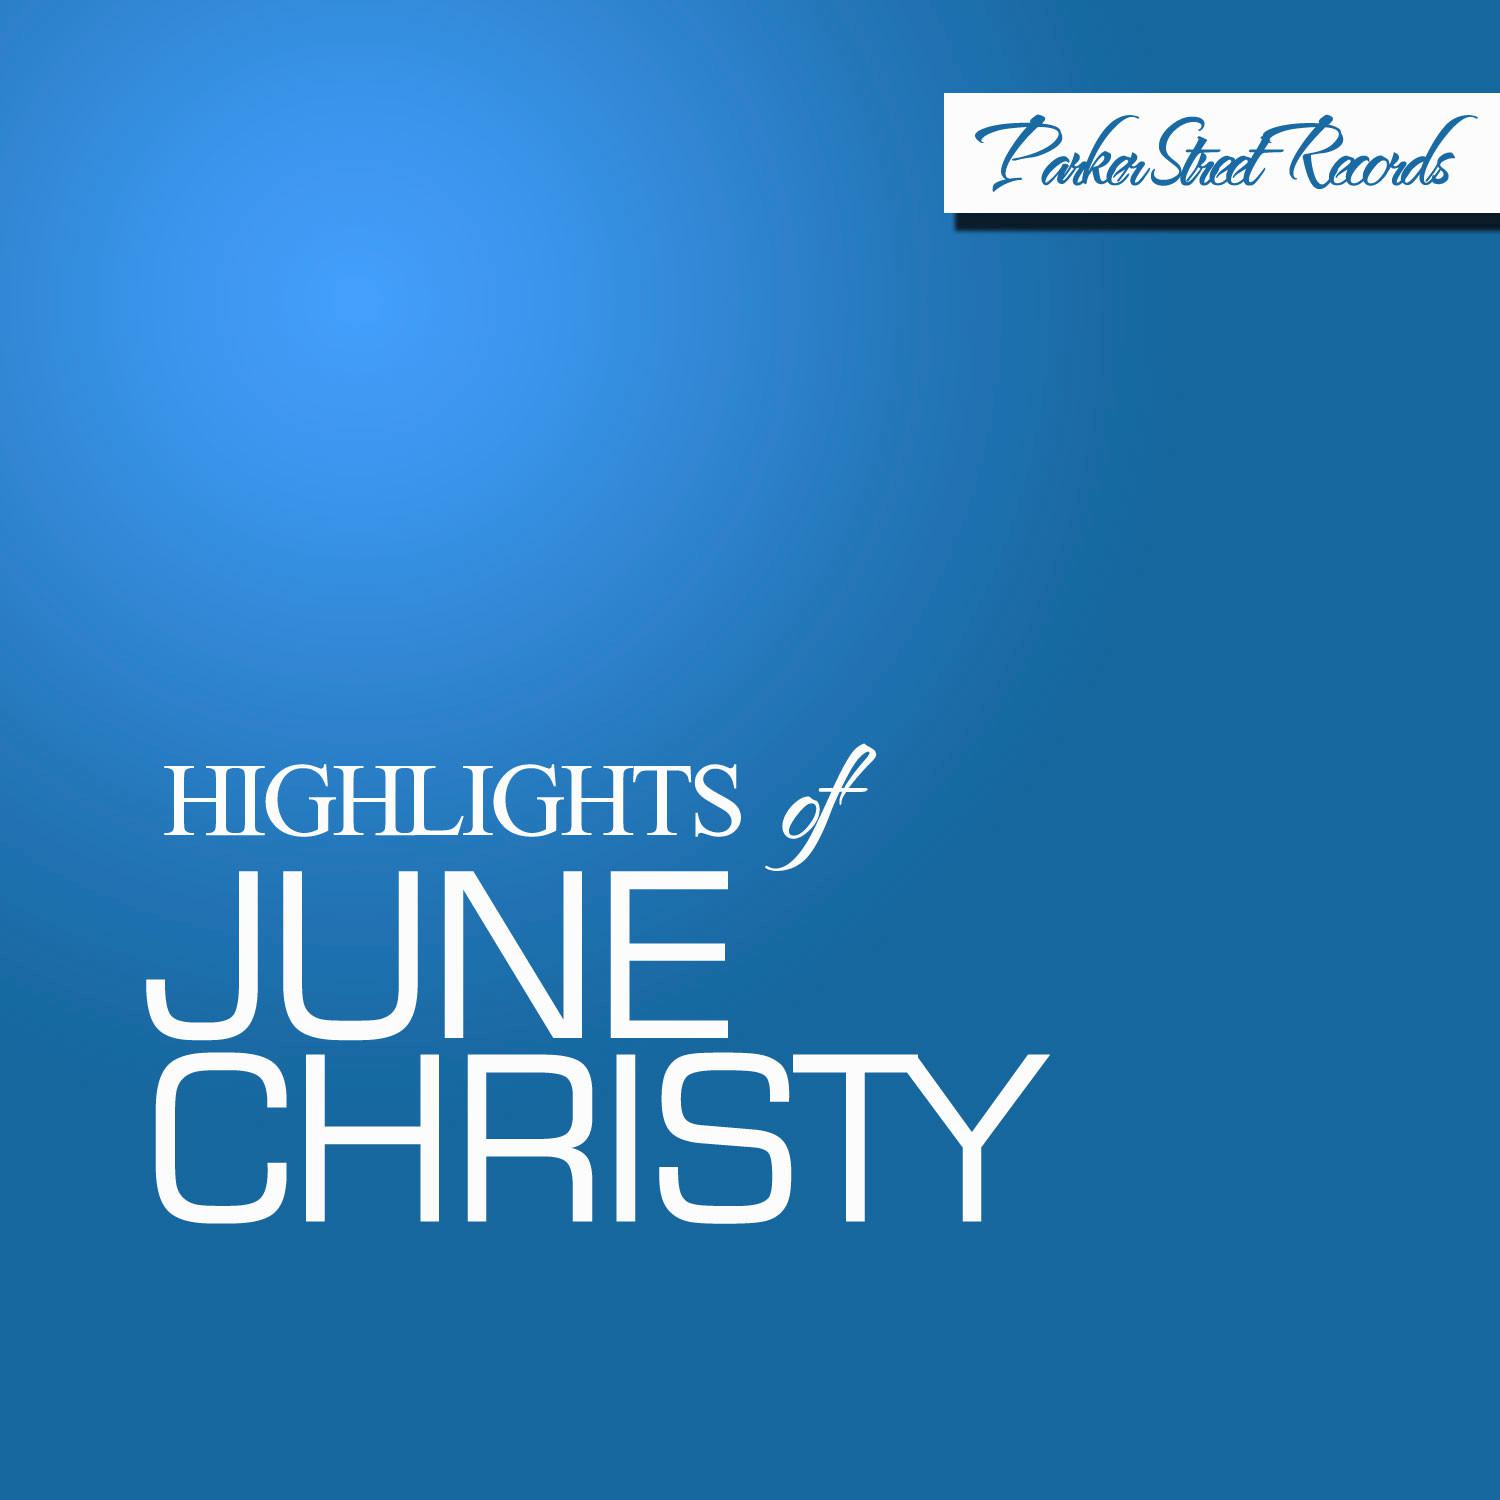 Highlights of June Christy